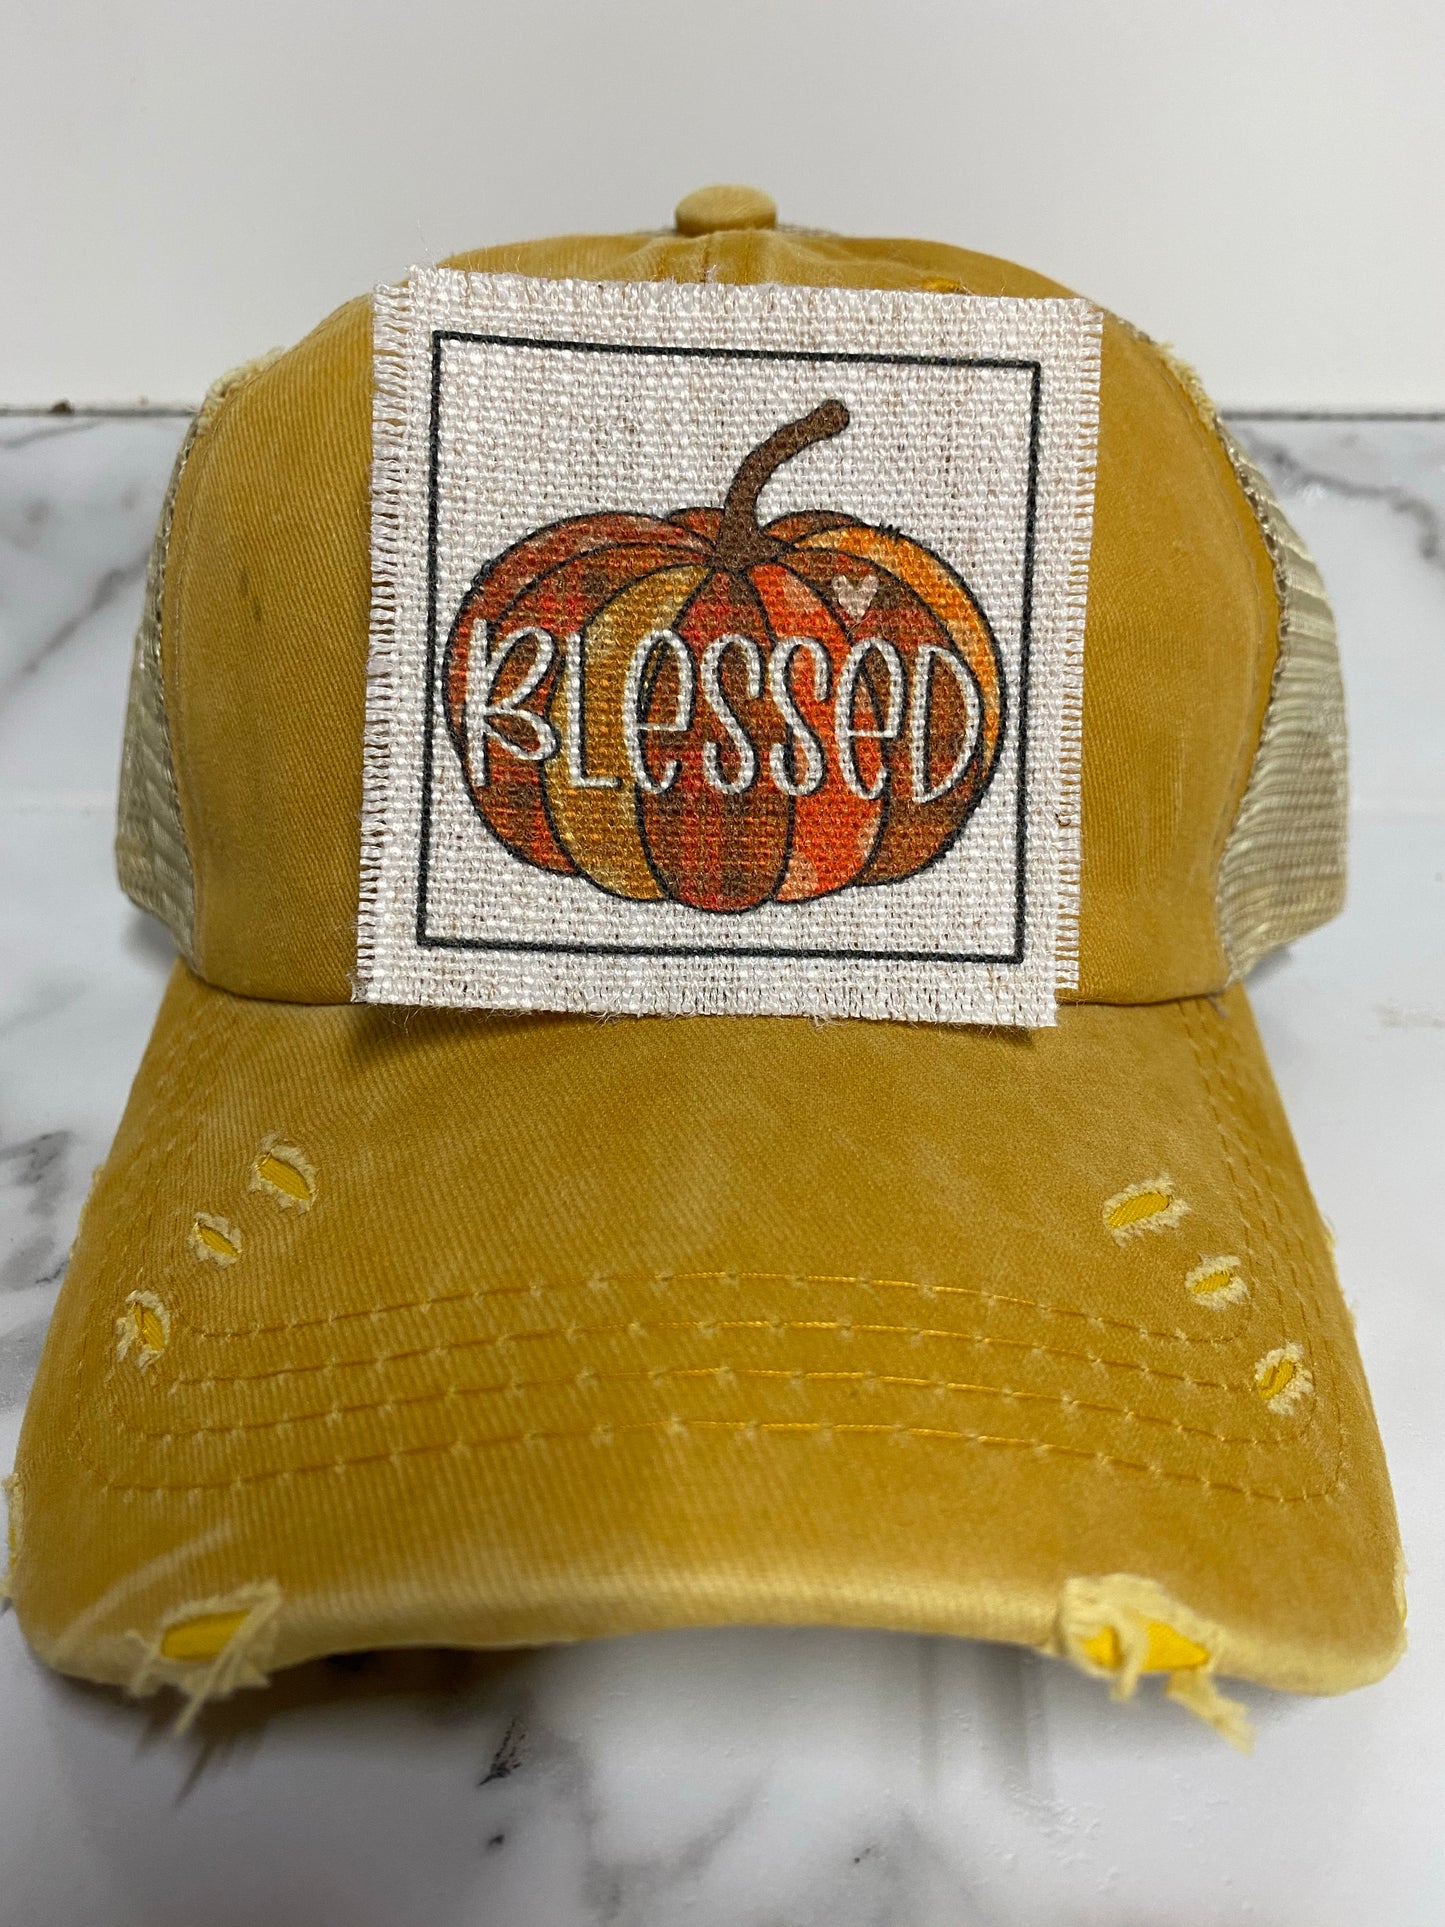 Blessed Plaid Pumpkin Hat Patch